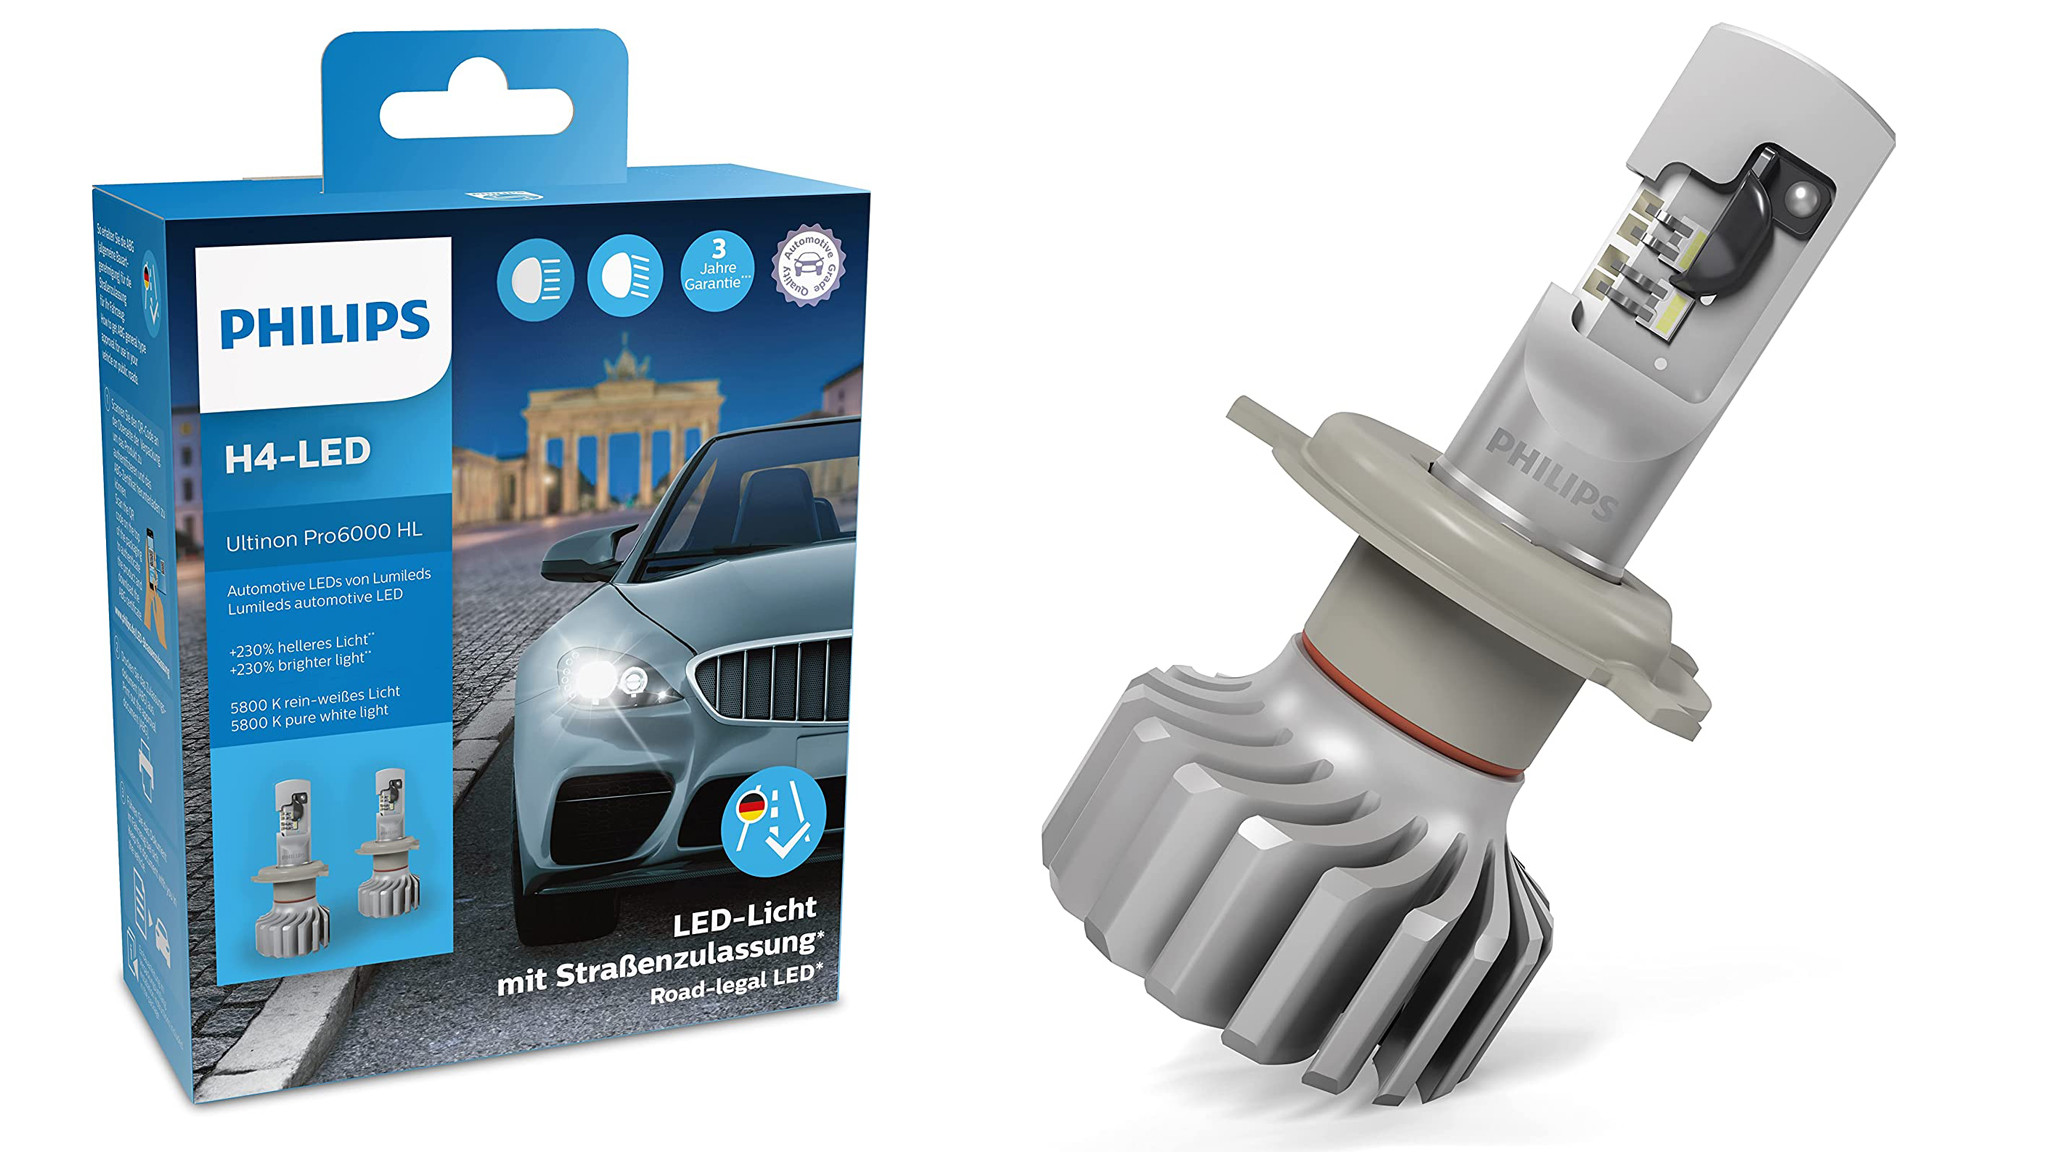 LED-Licht legal im Auto nachrüsten: Test Philips Ultinon Pro6000 H4 LED - COMPUTER  BILD